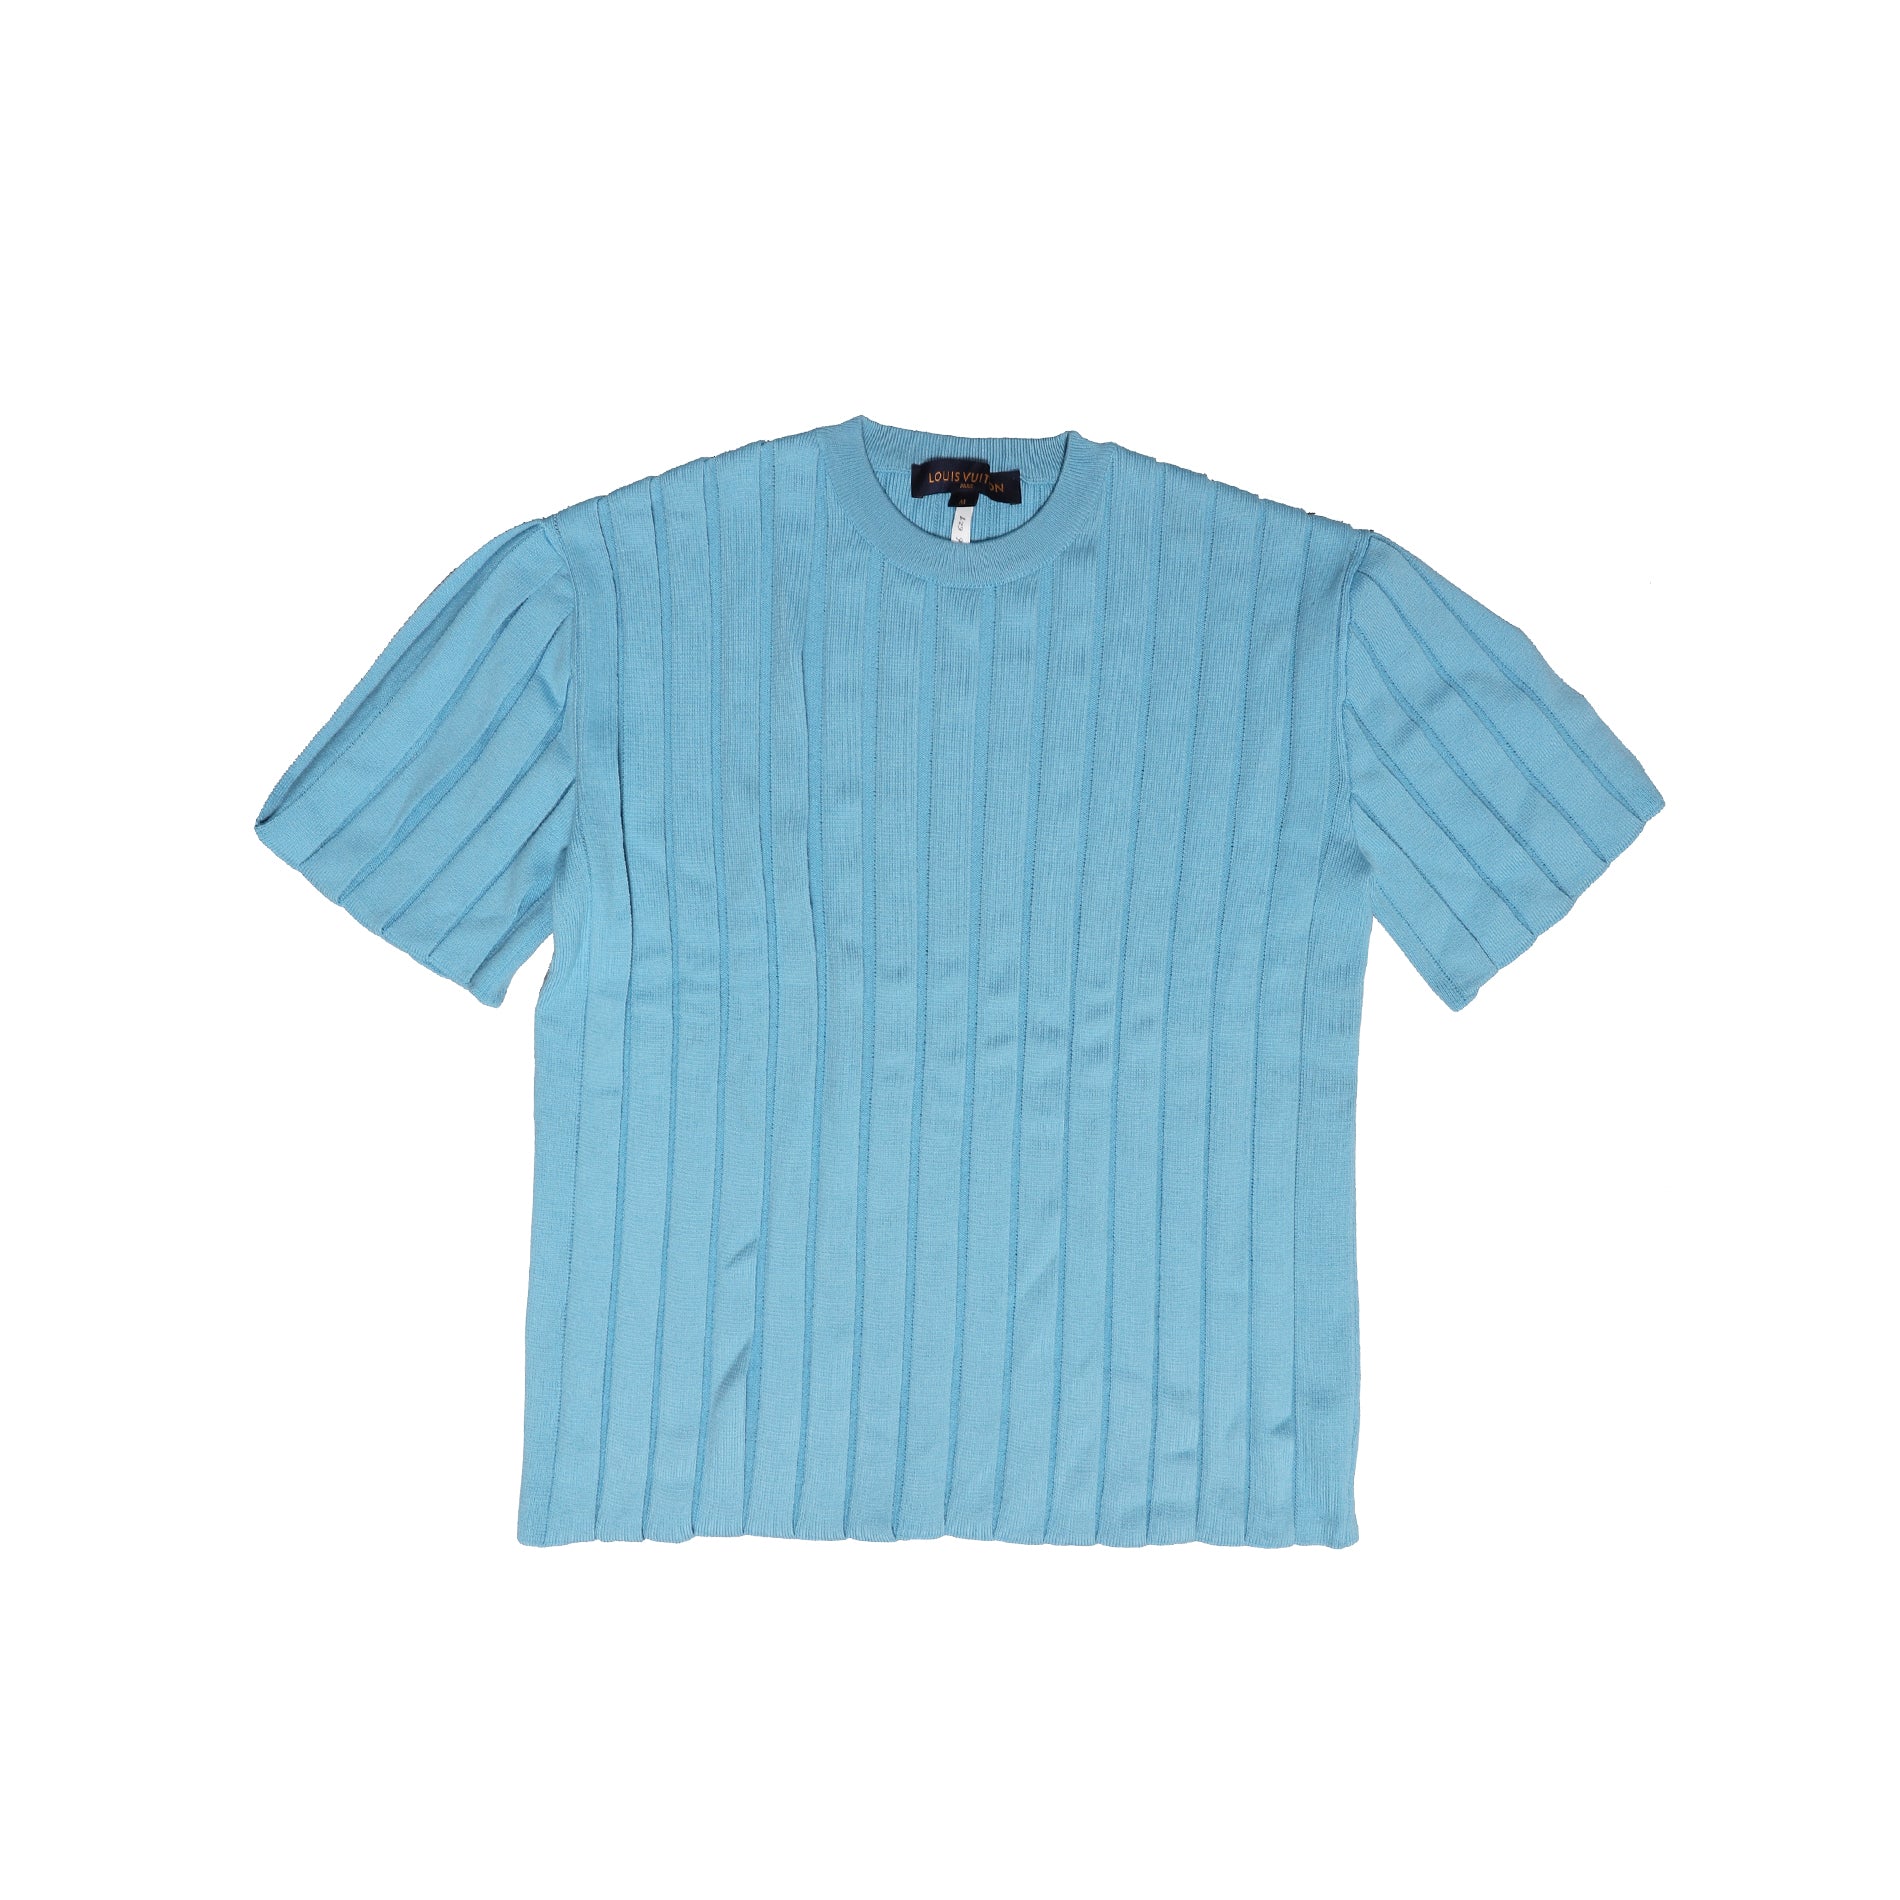 Louis Vuitton SS19 Show Invitation T-Shirt - Ākaibu Store